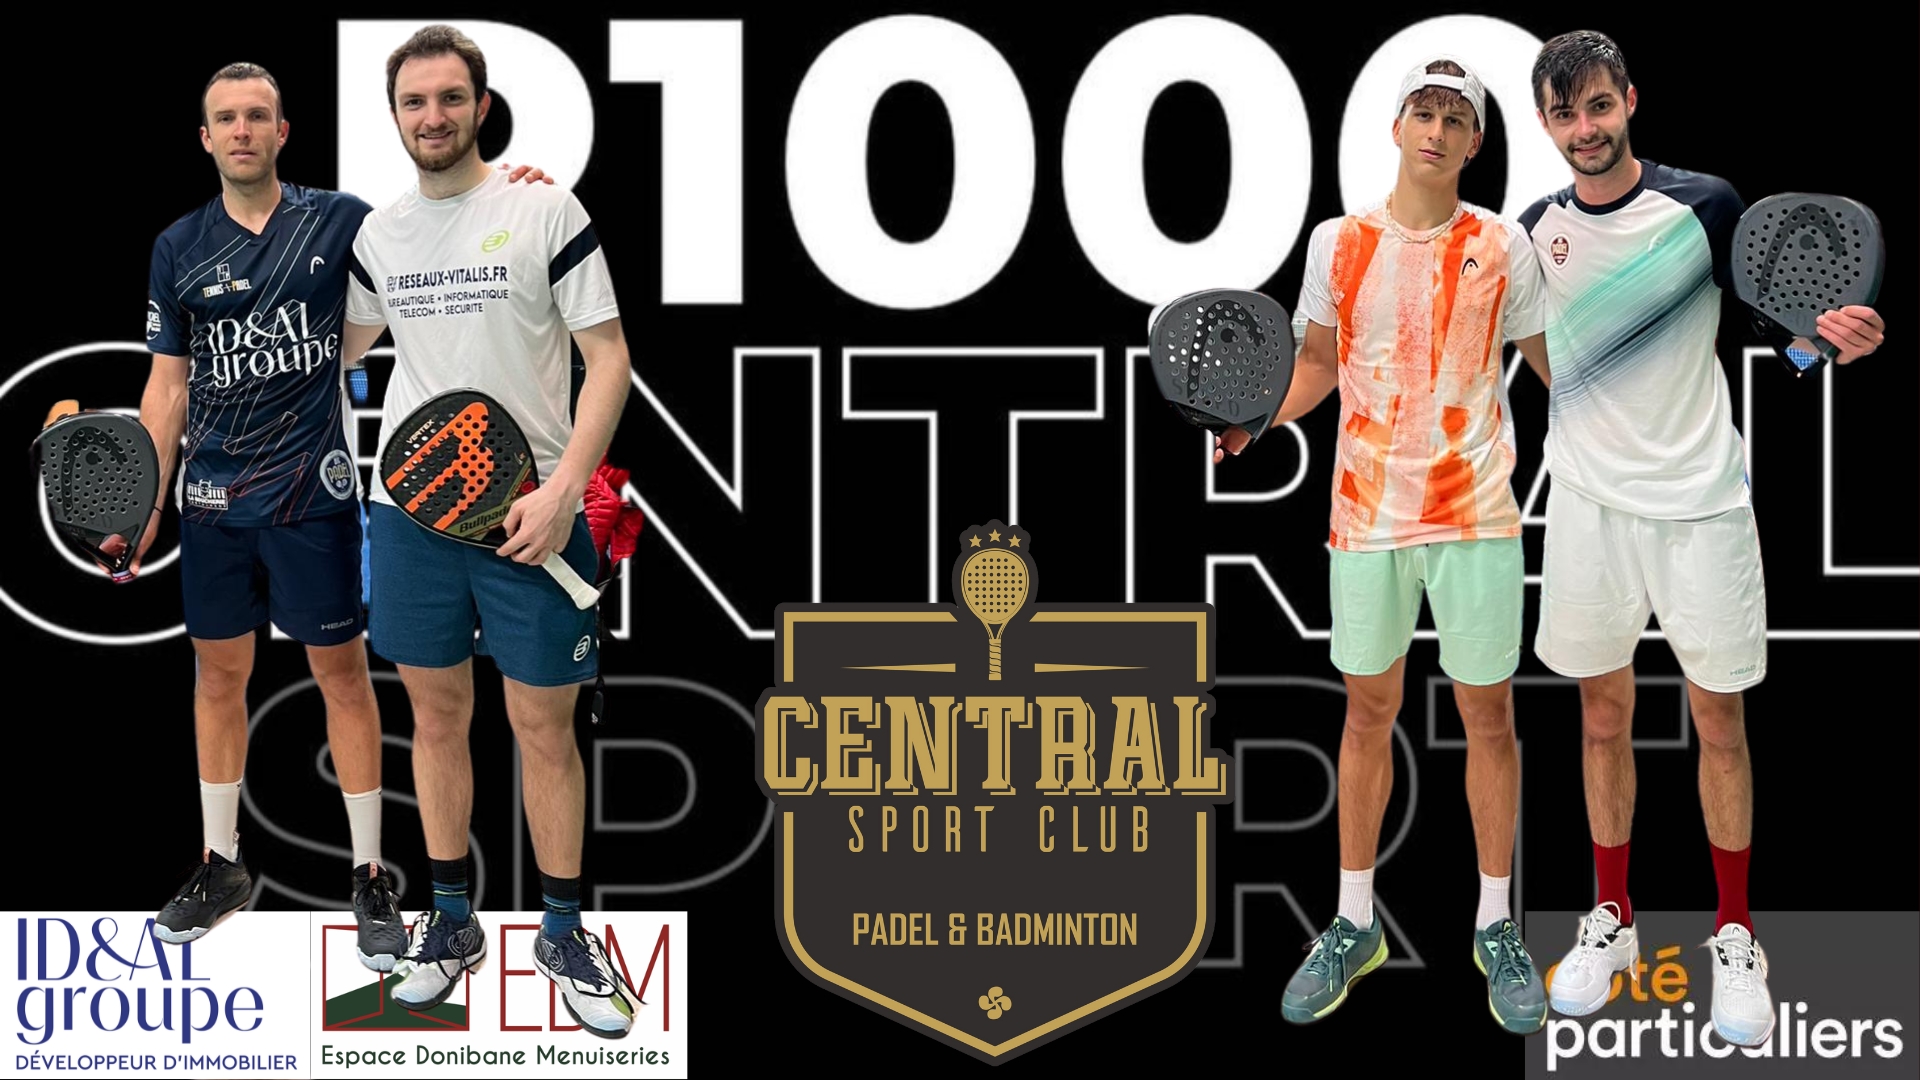 Final – P1000 Central Sport Club – Joris/Moura vs Grué/Raichman